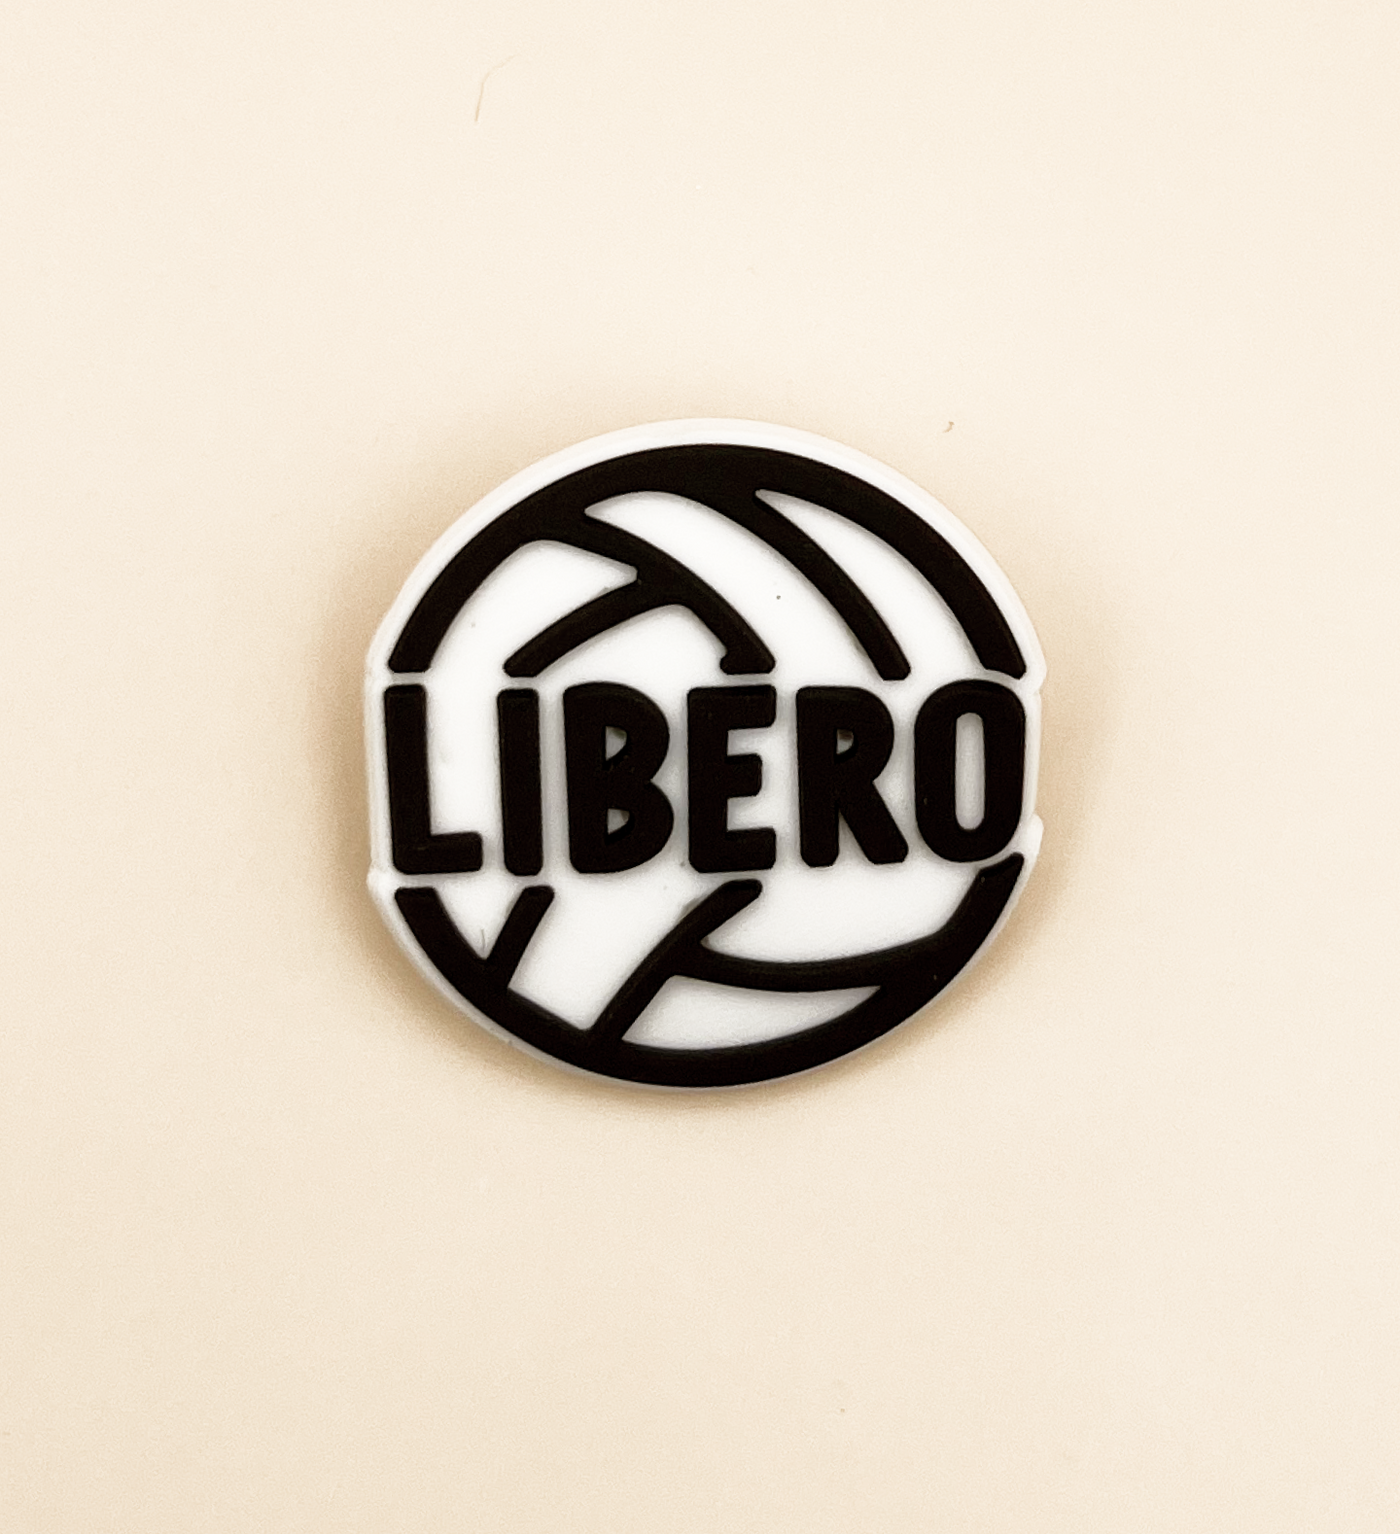 Libero - Volleyball Shoe Croc Charm